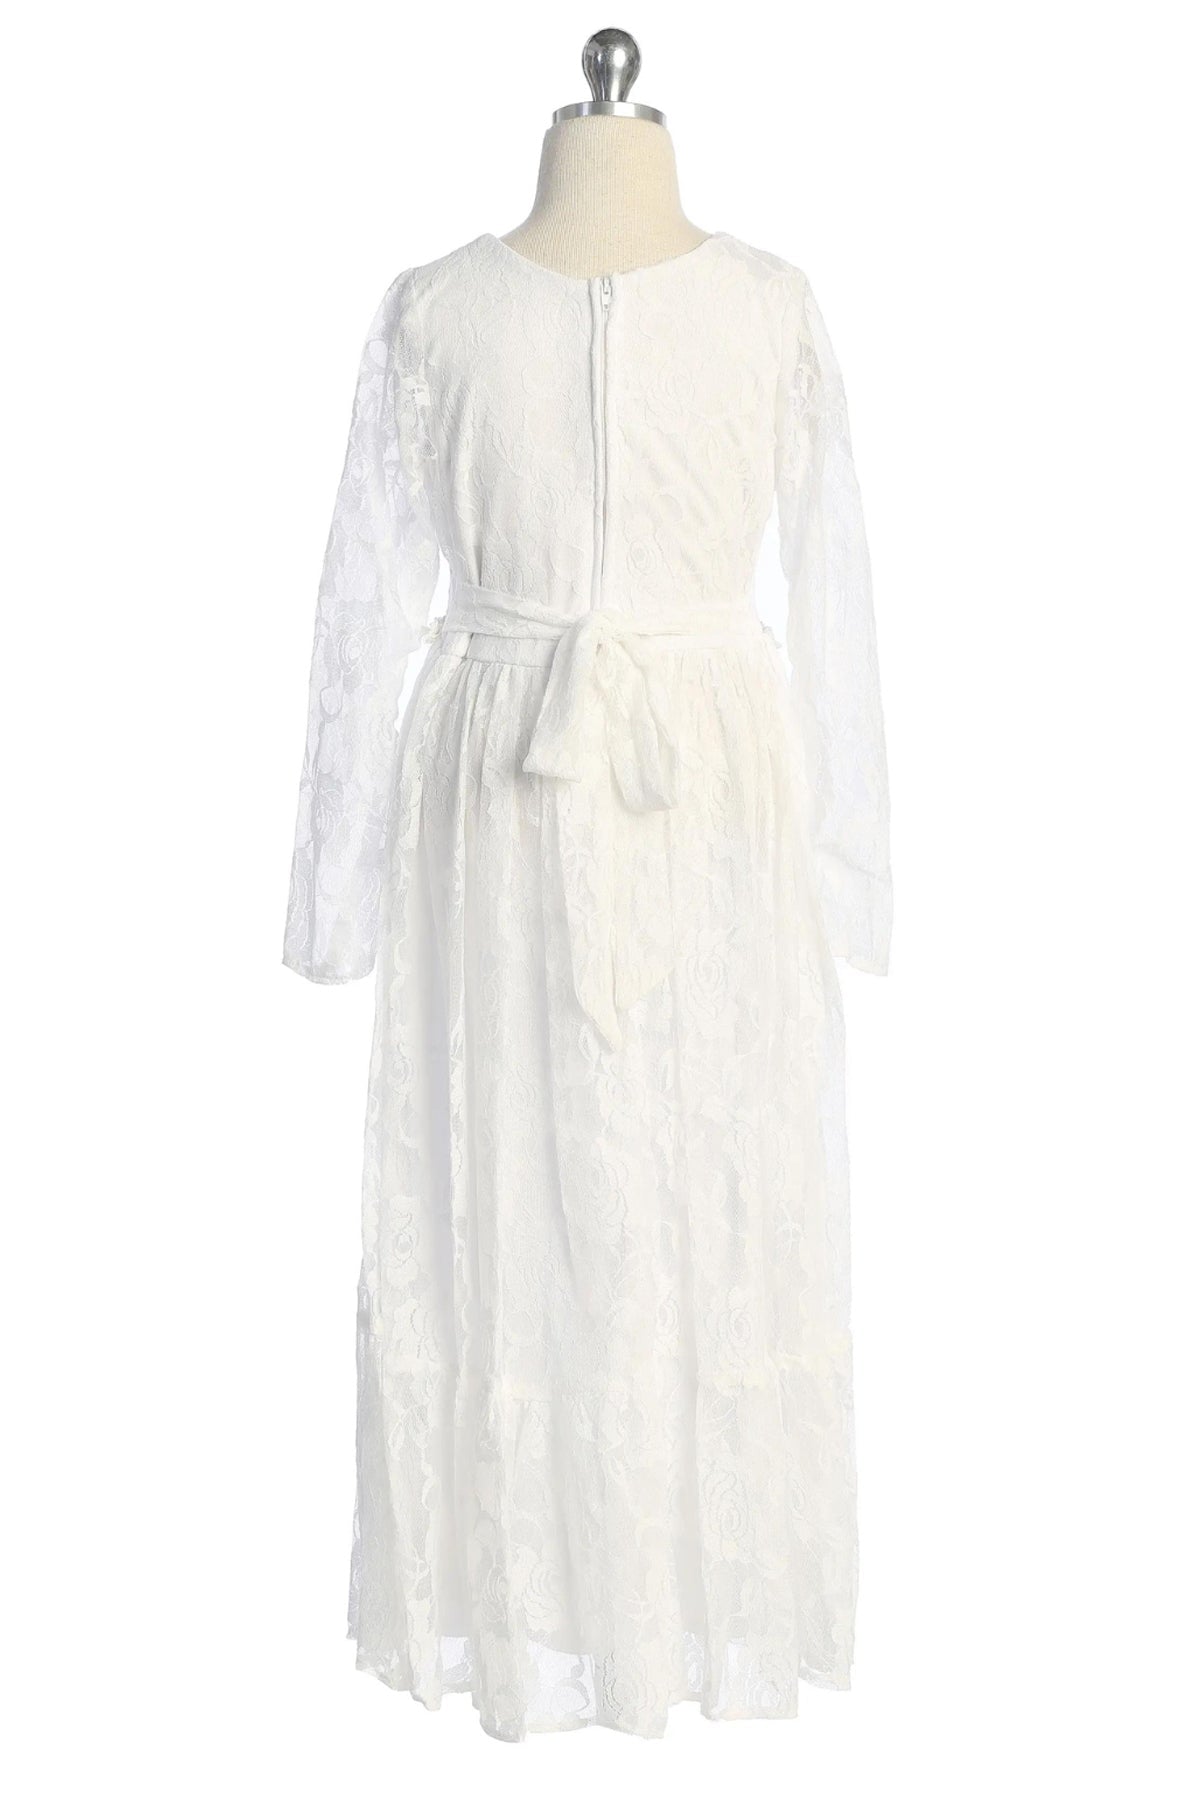 Dress - Long White Lace Maxi Boho Girls Dress